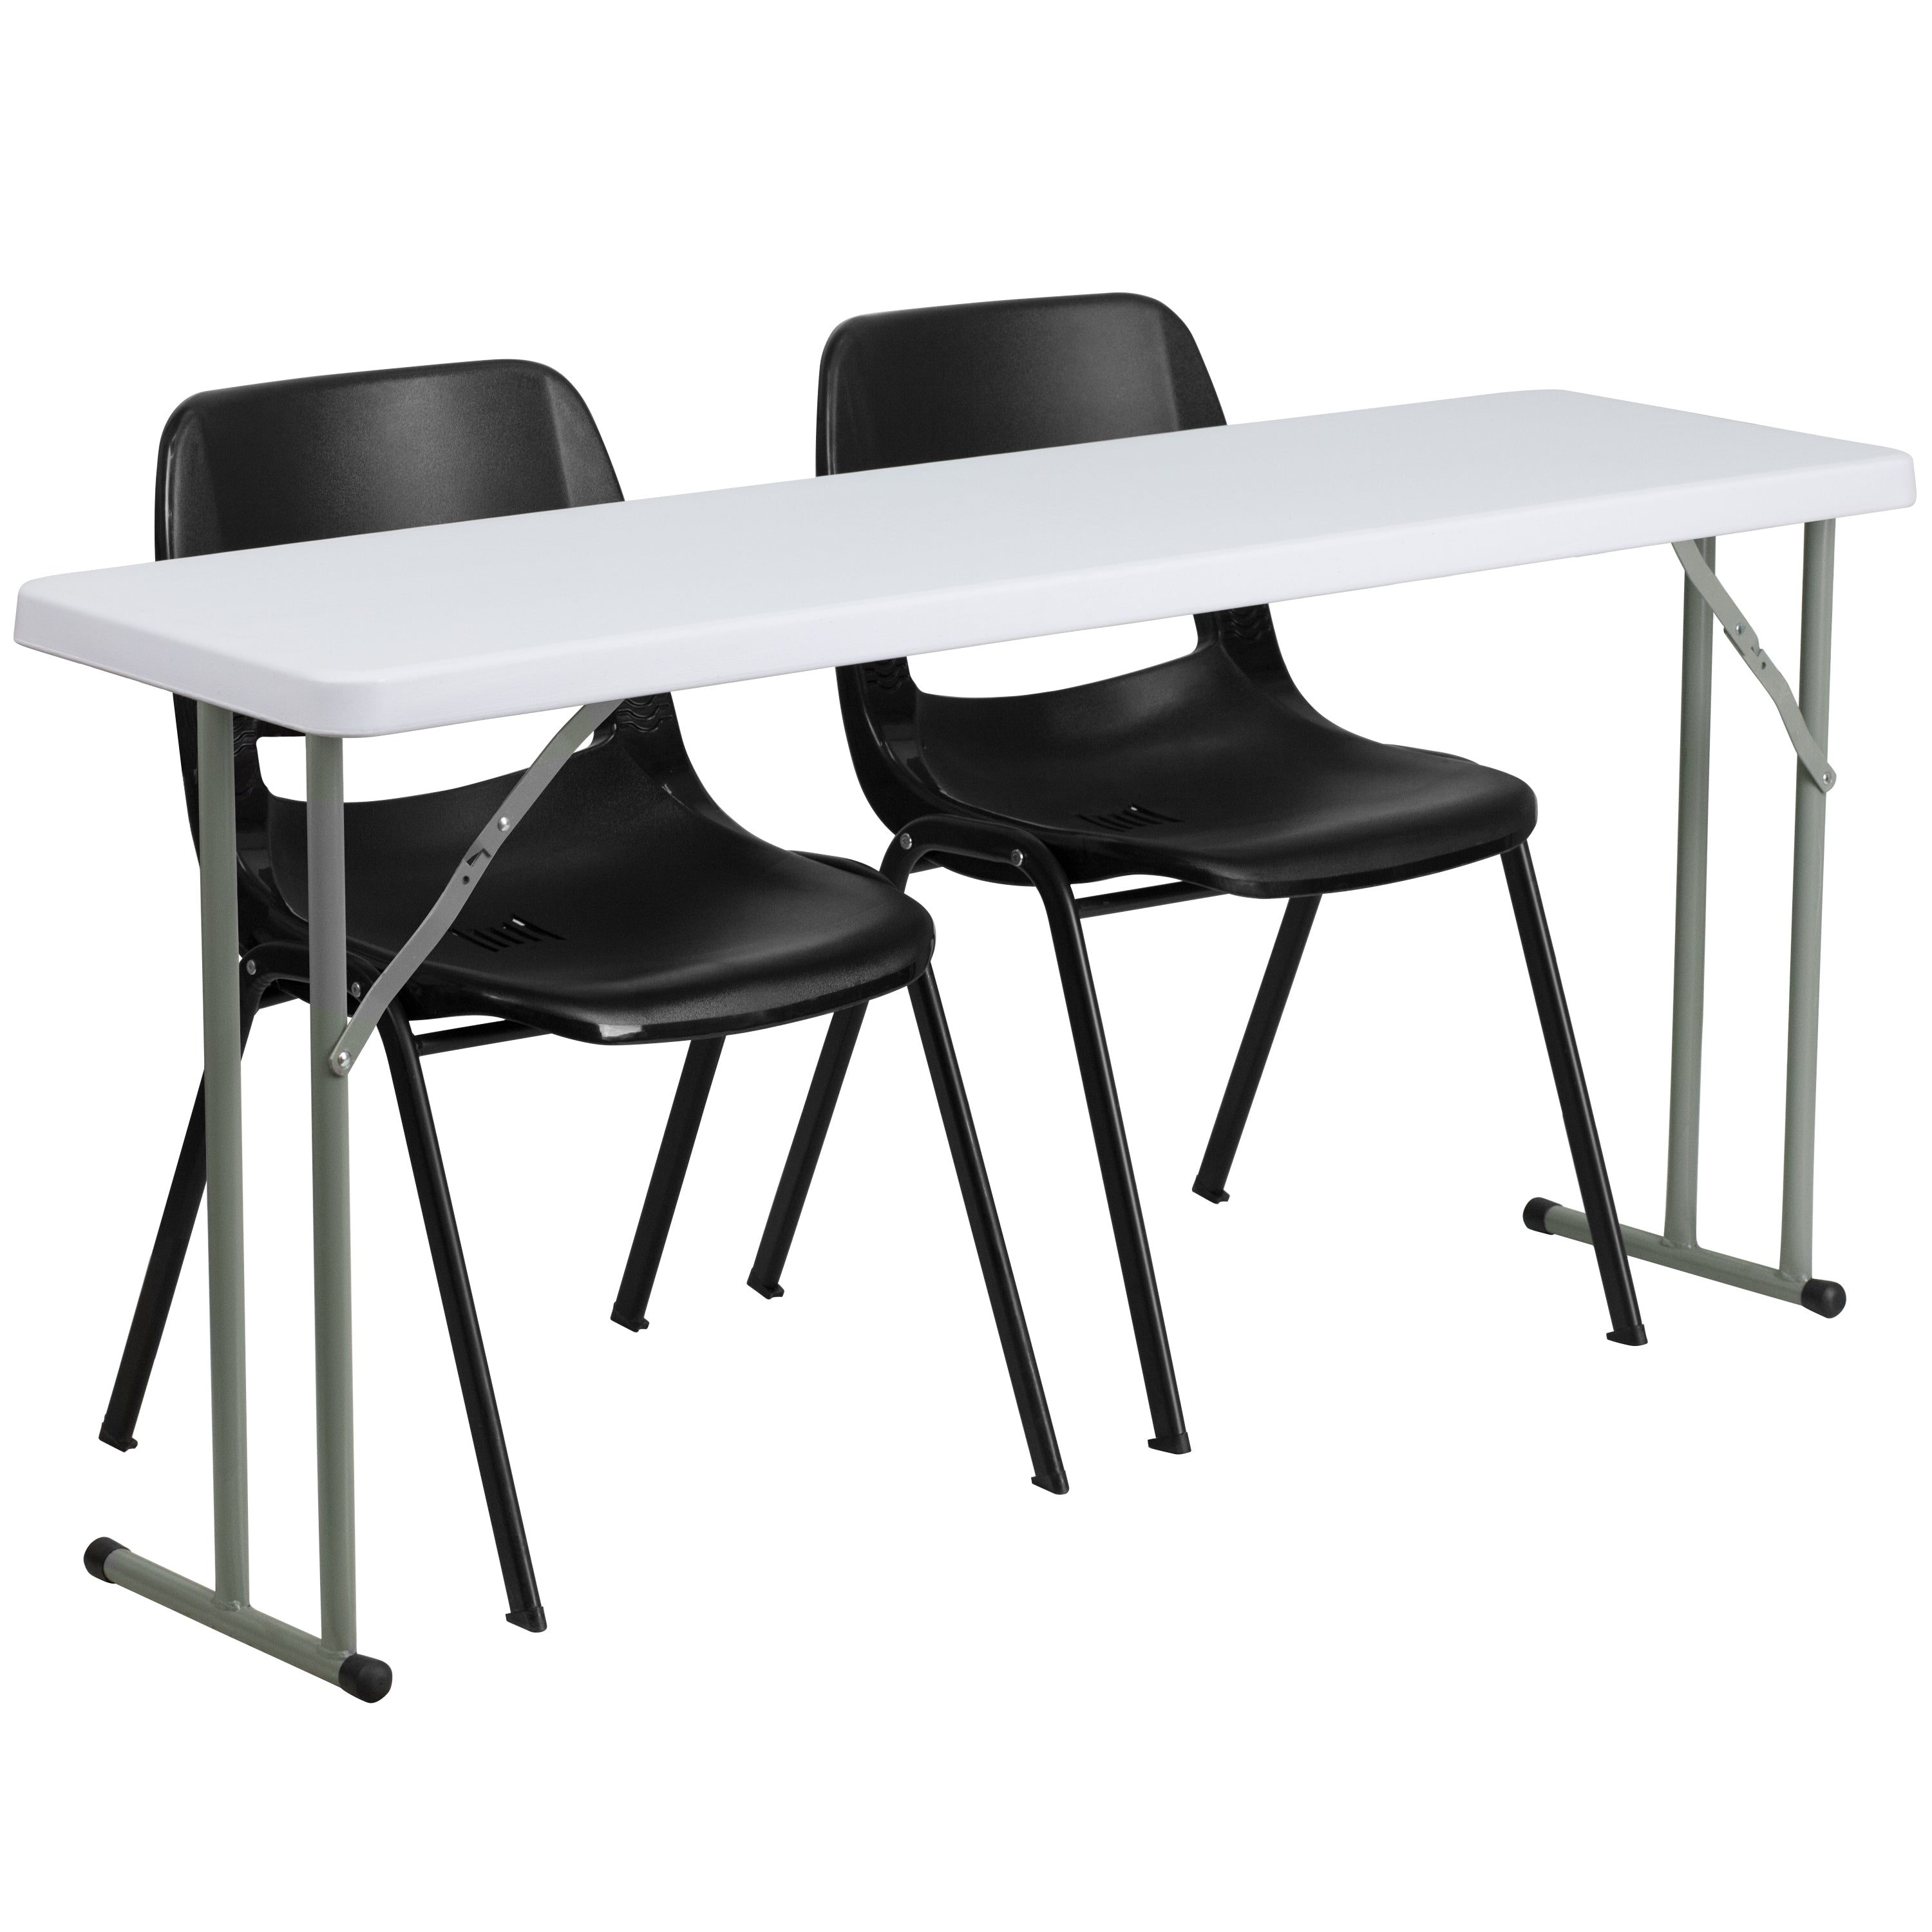 5-Foot Plastic Folding Training Table Set with 2 Black Plastic Stack Chairs-Training Table and Chair Set-Flash Furniture-Wall2Wall Furnishings